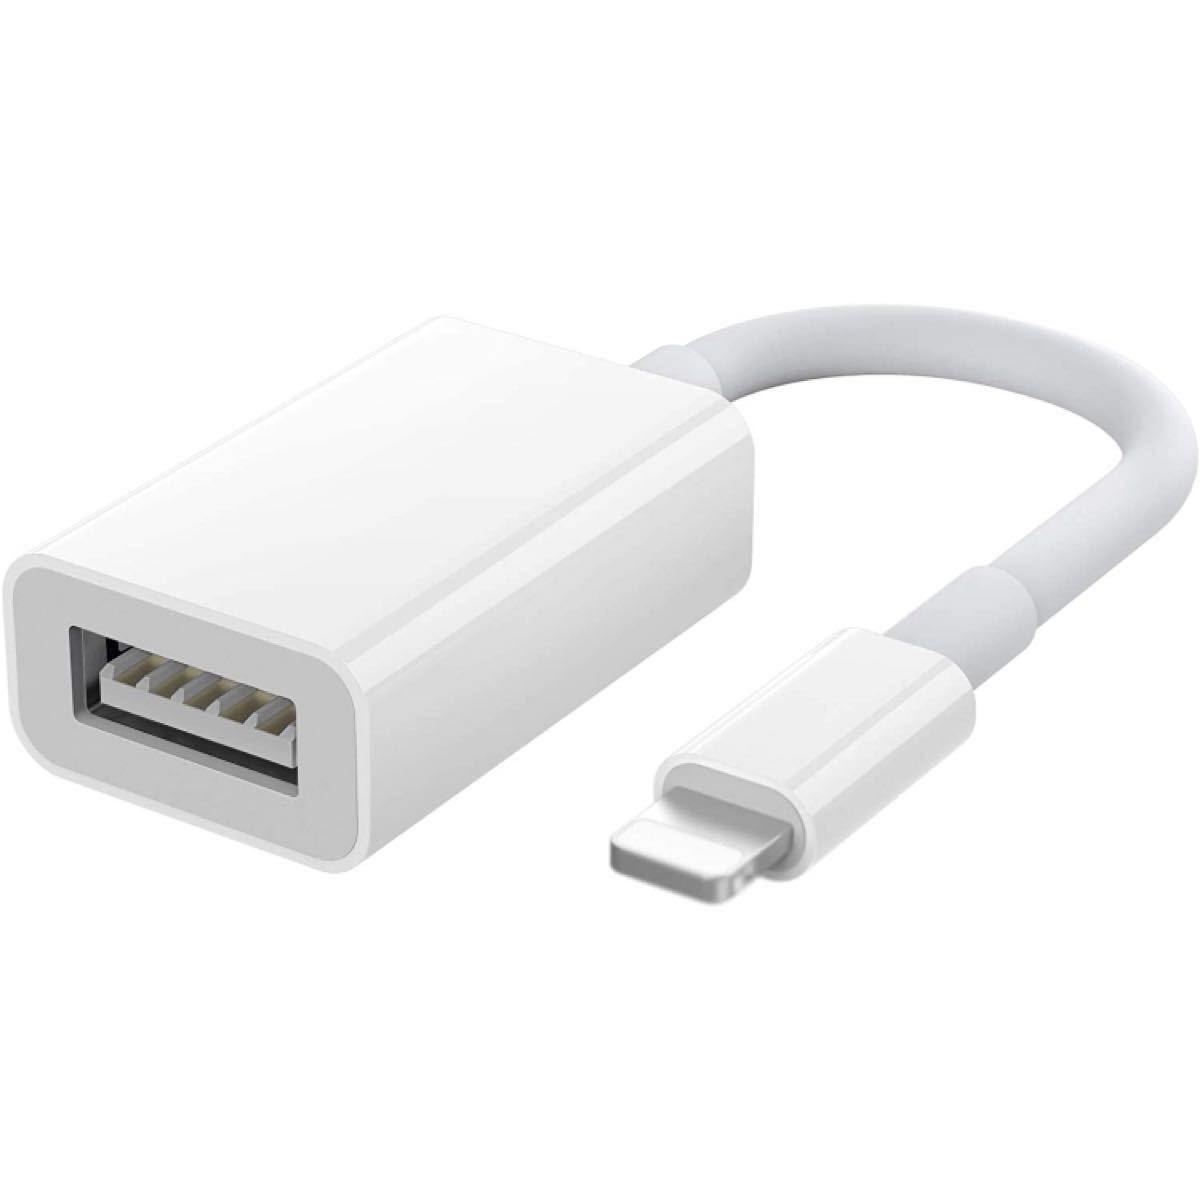 USBカメラアダプタ iPhone USB 変換アダプタUSB3.0高速伝送 for iPad iPhone対応 OTGケーブル 